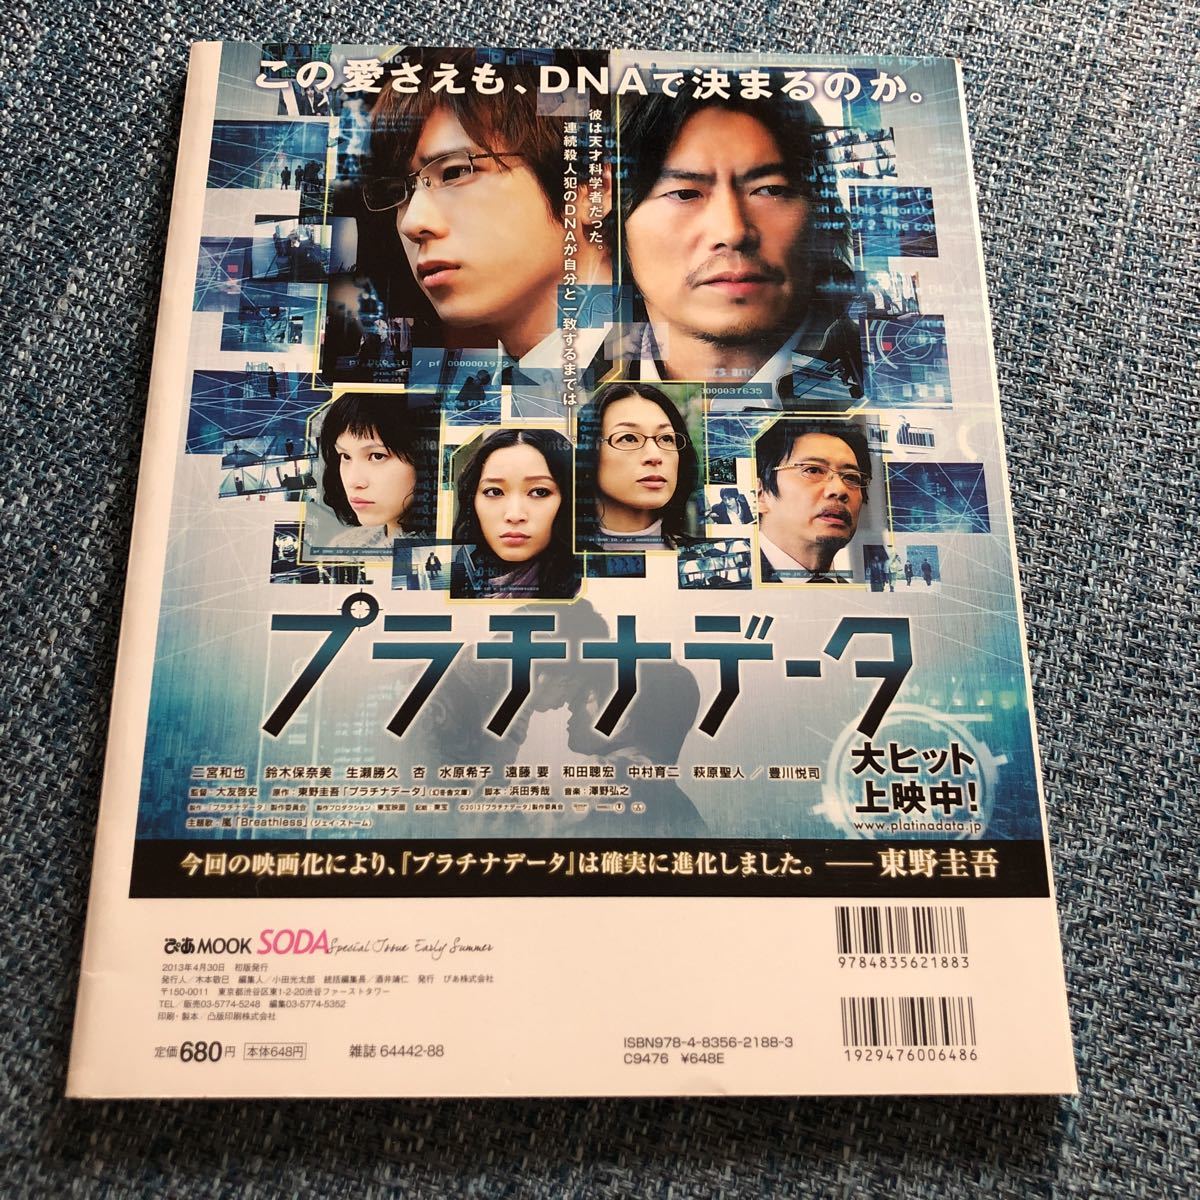 SODA Special Issue Early Summer 表紙:三浦春馬 品質検査済 5200円